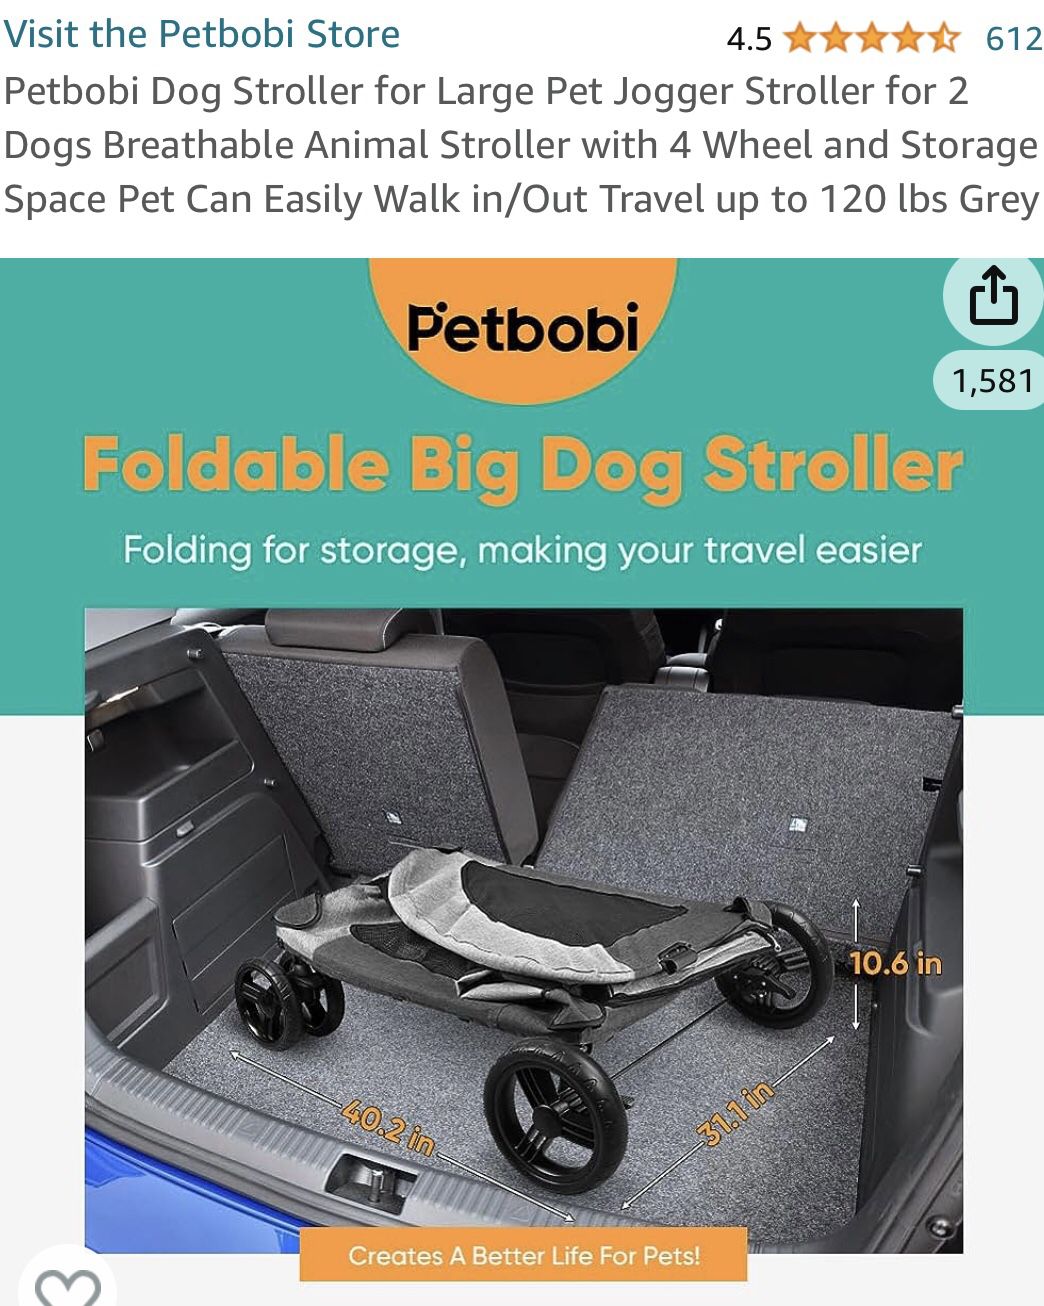 Petbobi Dog Stroller